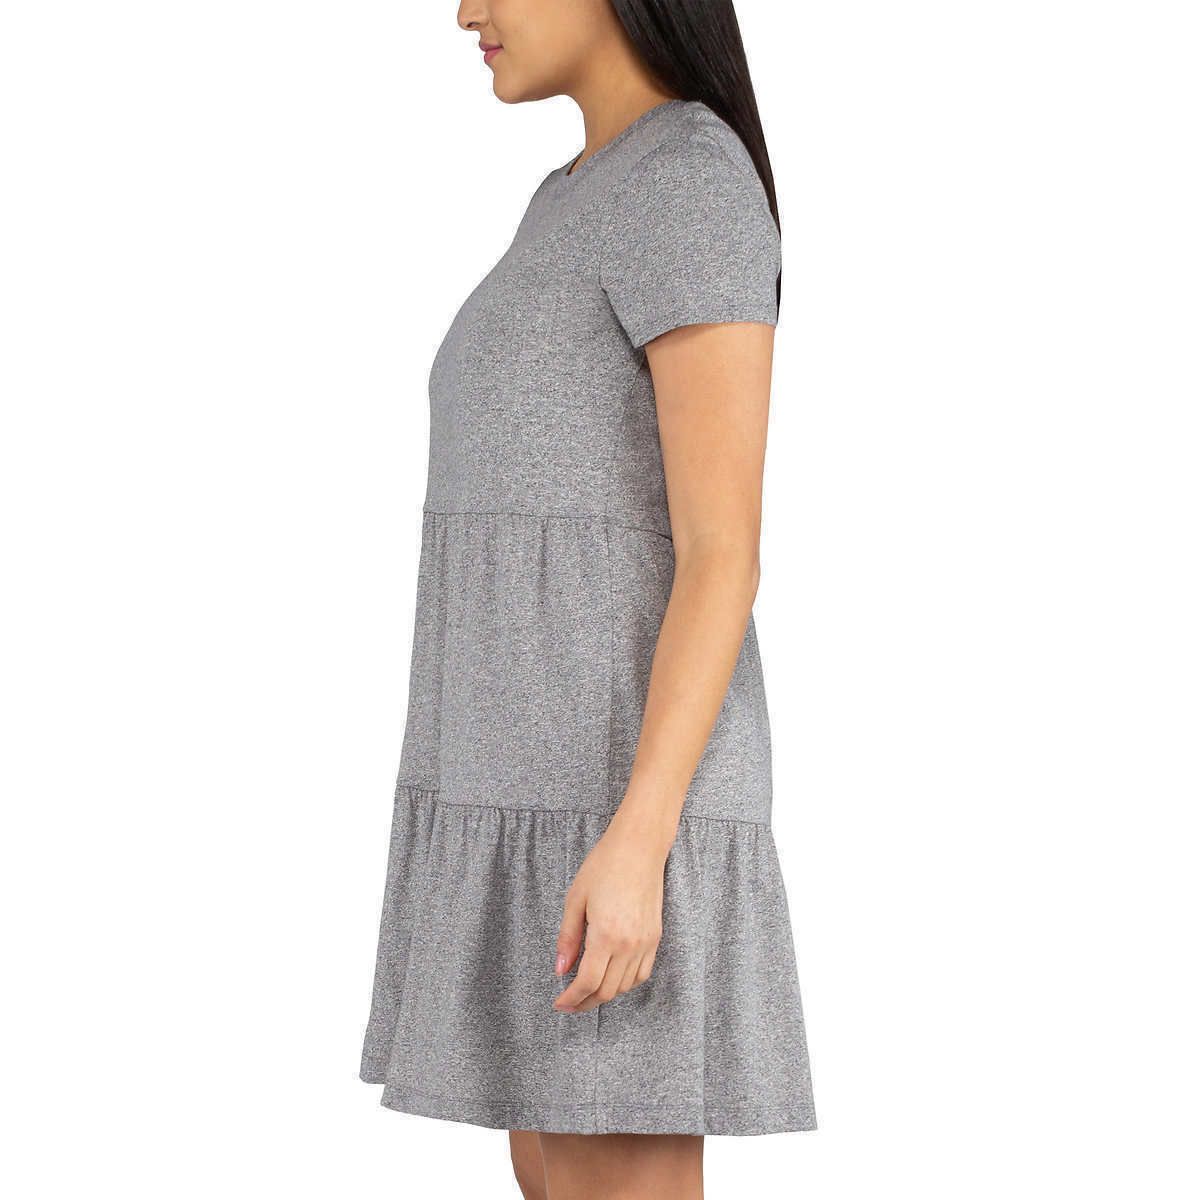 Nicole Miller Women's Tiered Dress - Sleeveless Scoop Neck Knee-Length Feminine Elegant Dress